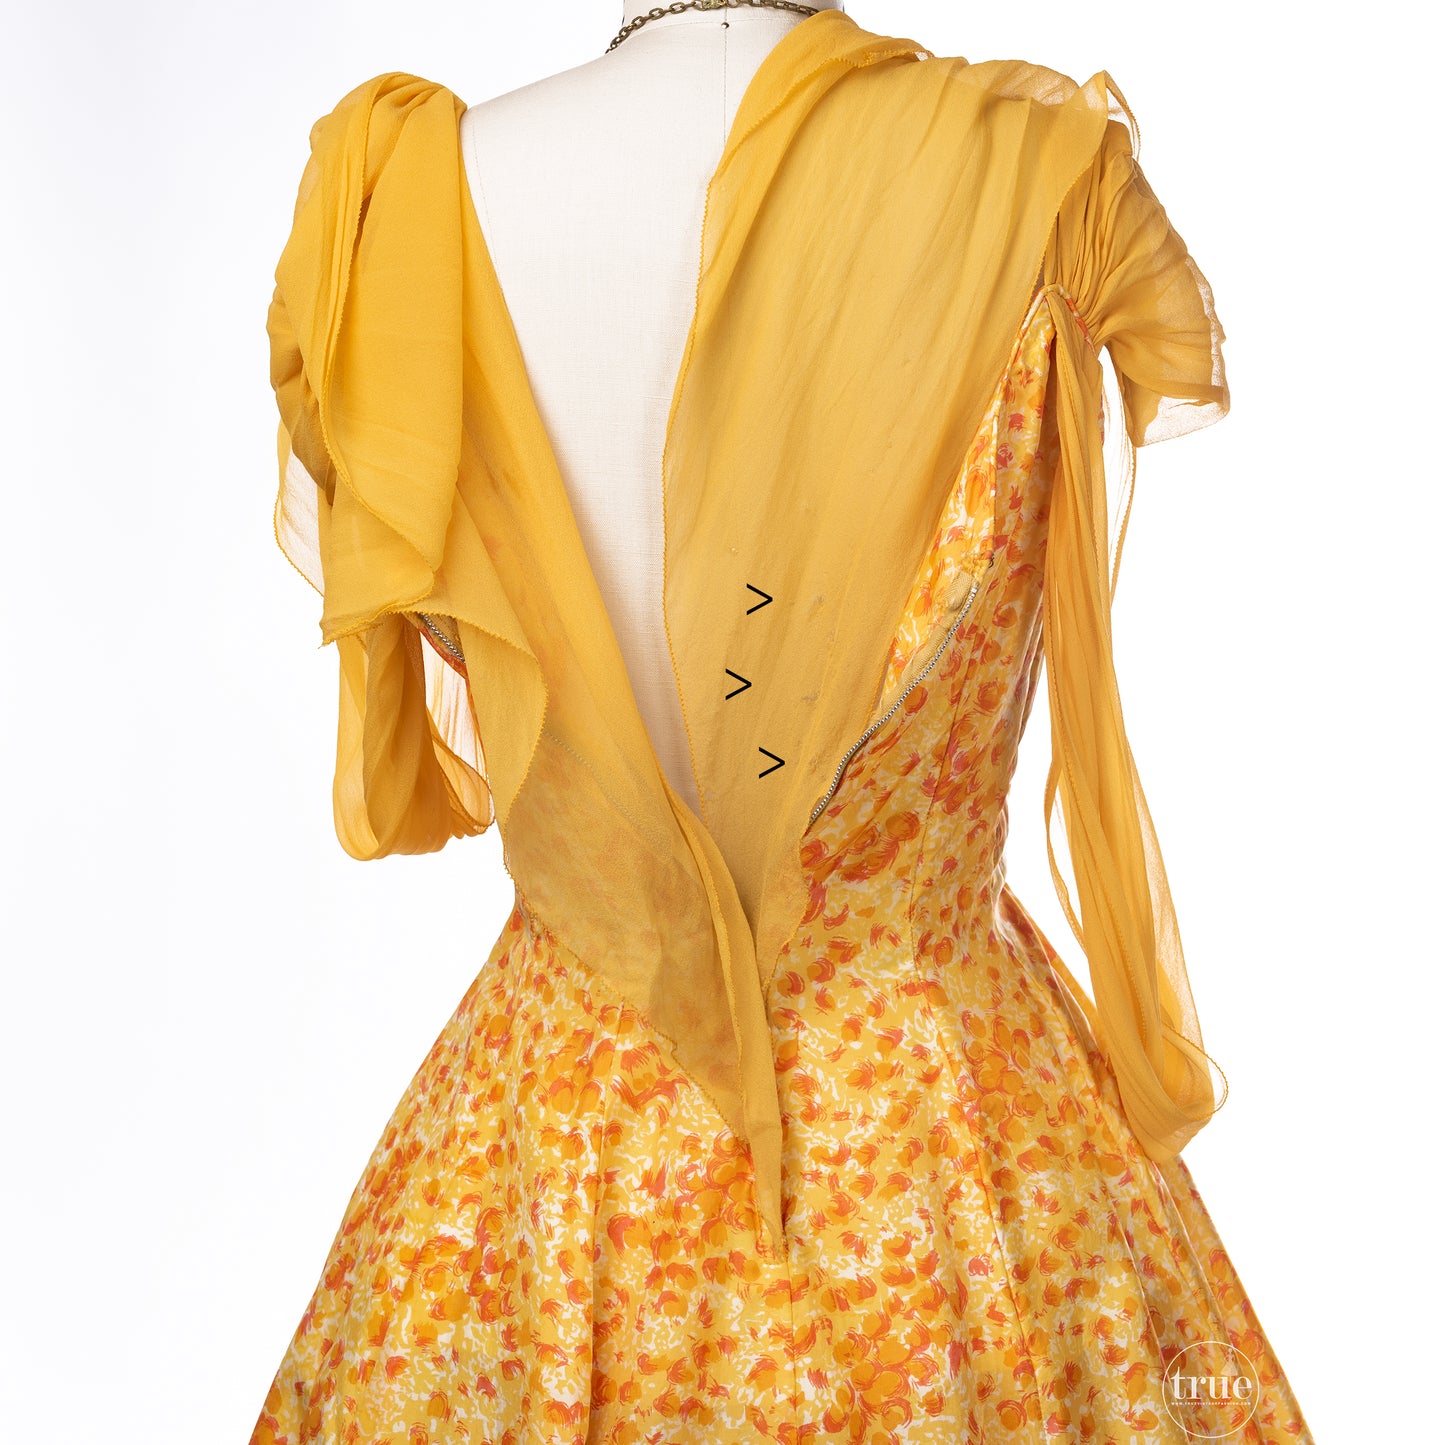 vintage 1950's dress ...pretty sunshine floral Original by Phyllis Dance Time silk full skirt dress with crinoline